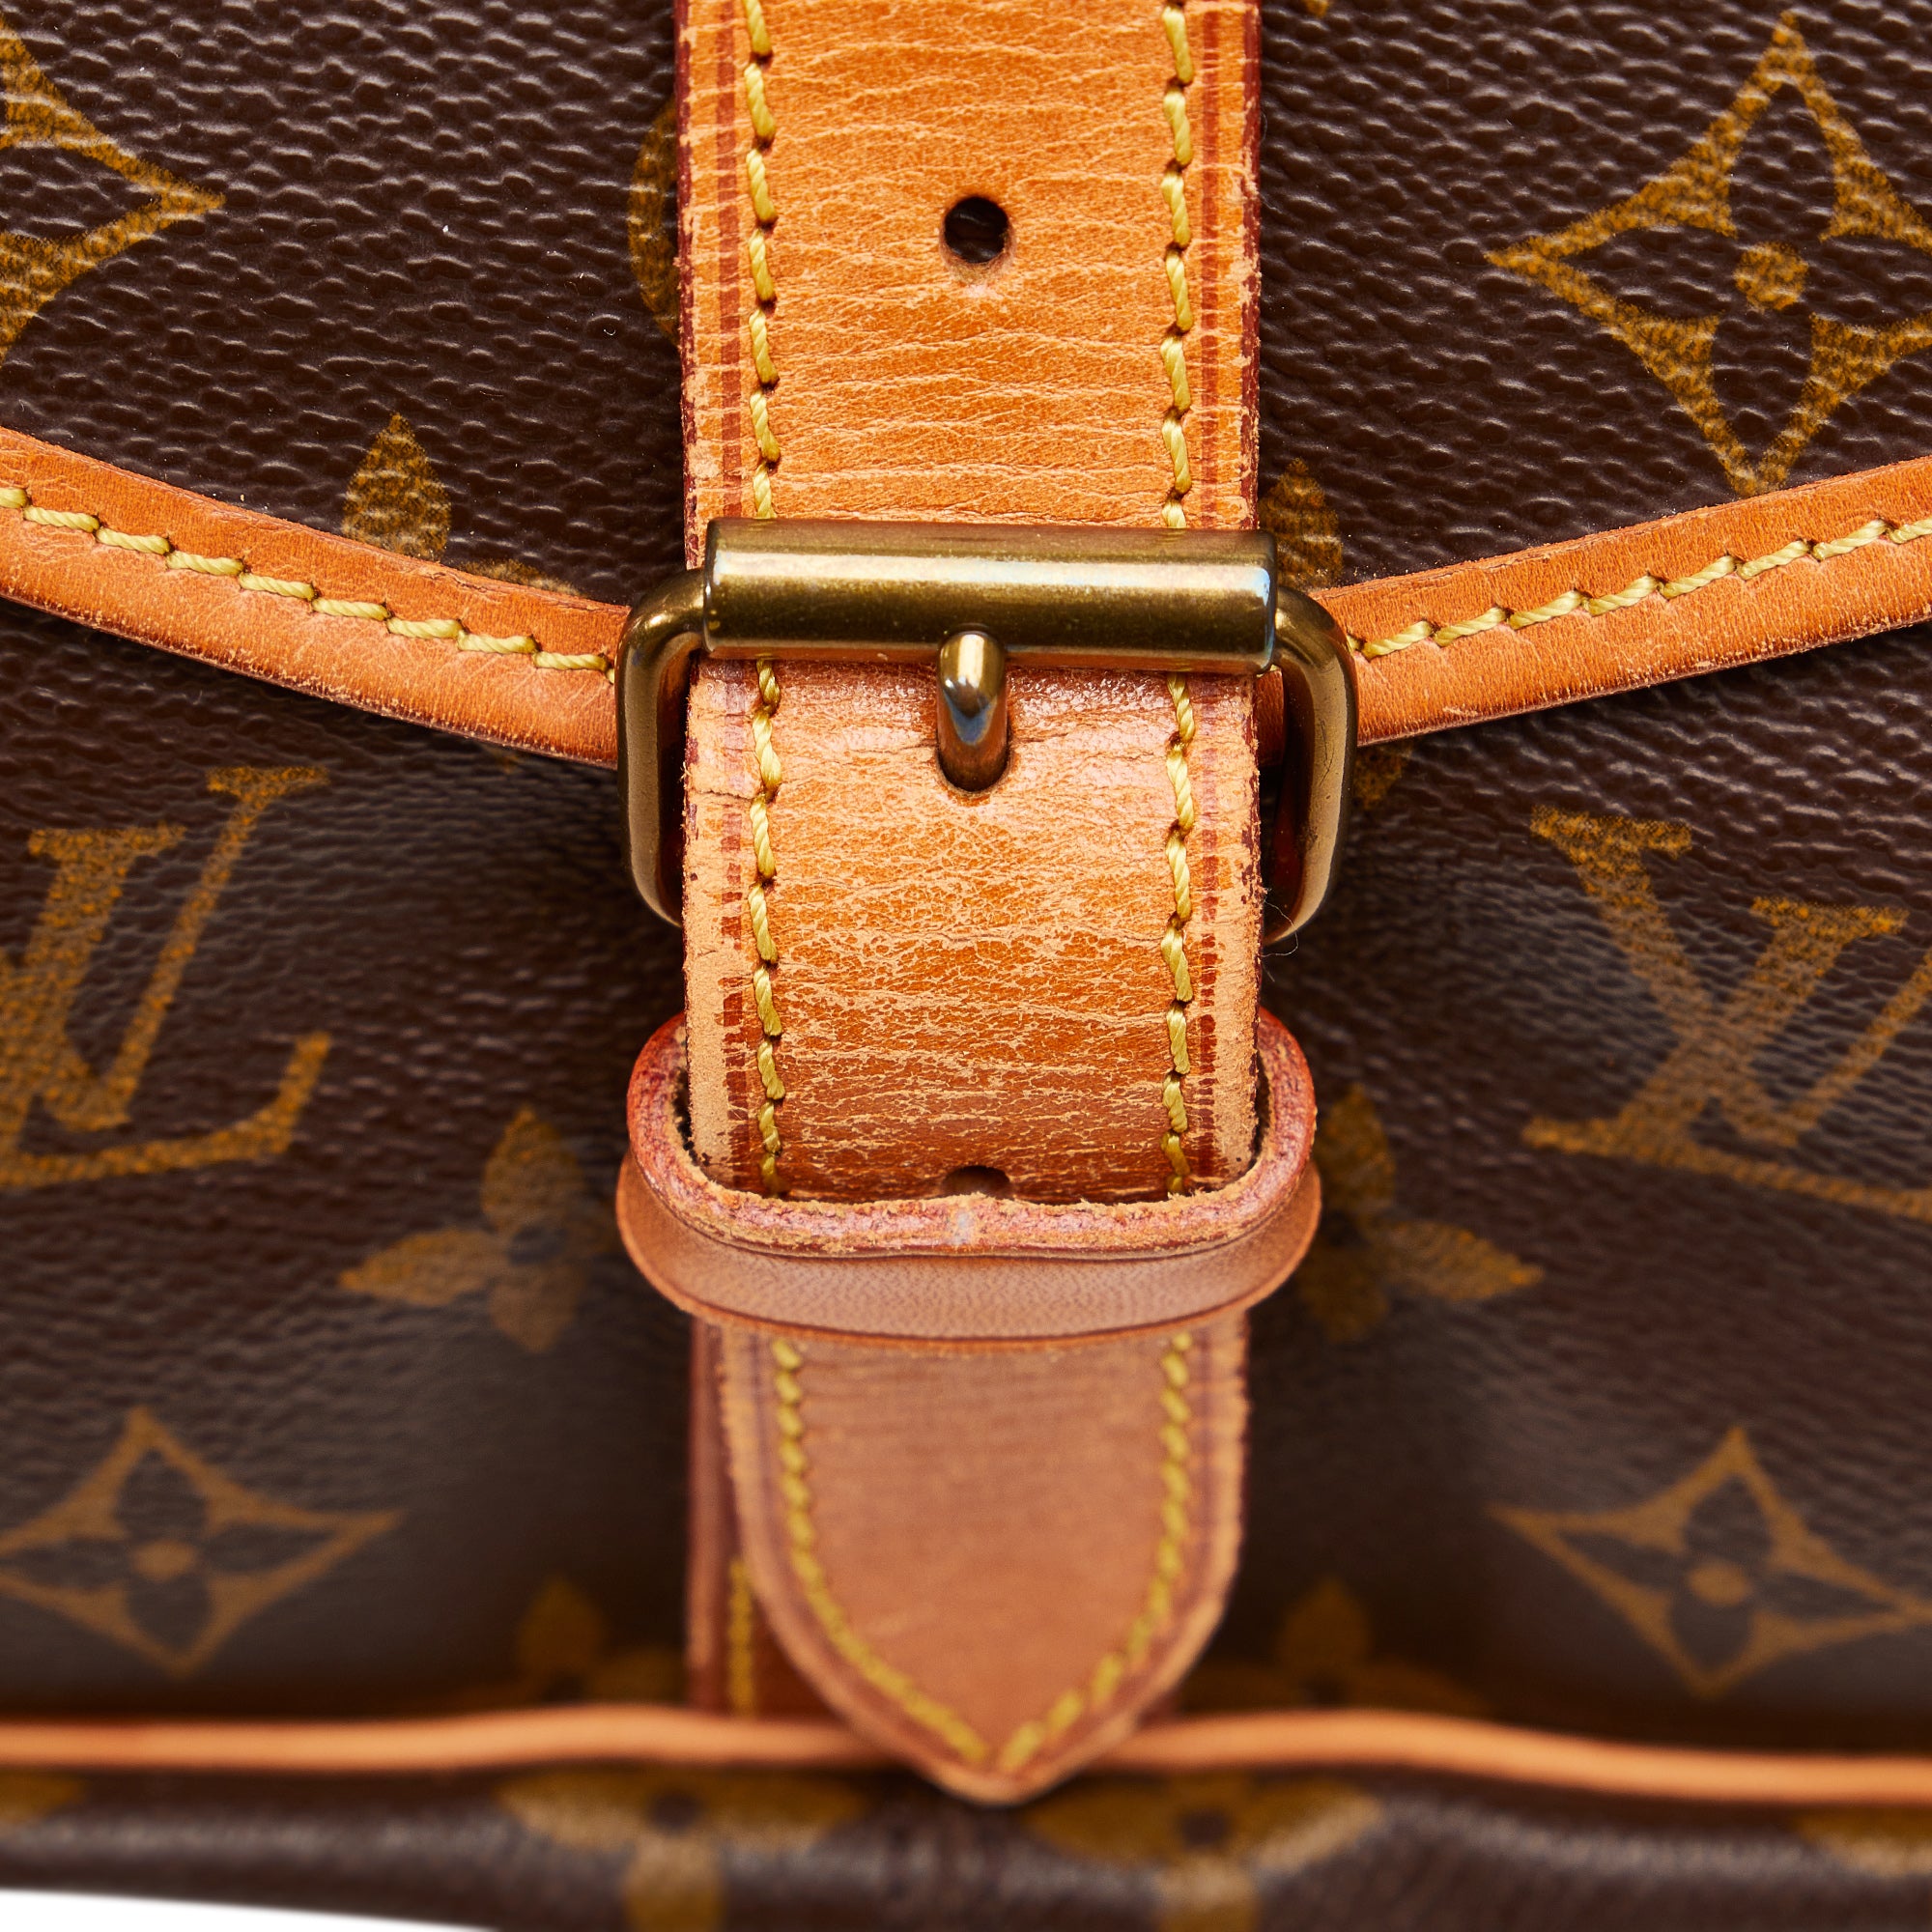 Brown Louis Vuitton Monogram Saumur 35 Crossbody Bag – Designer